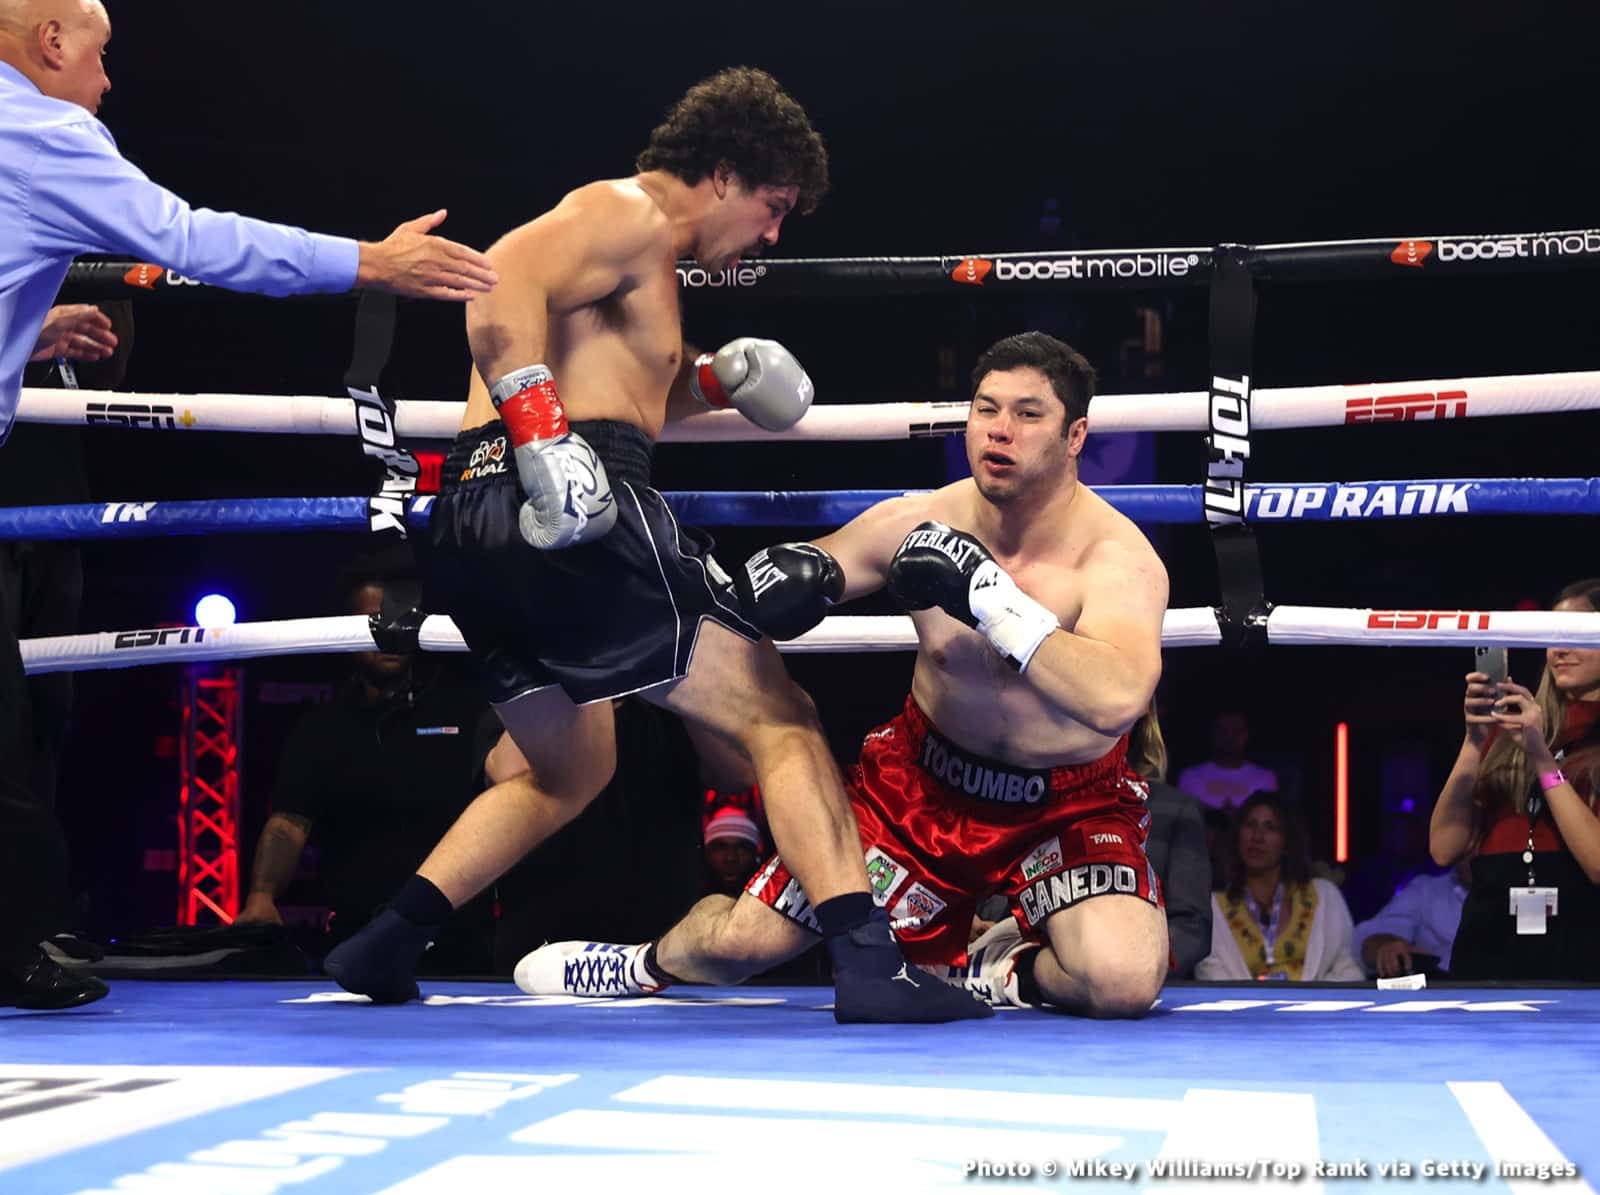 Jose Pedraza boxing image / photo